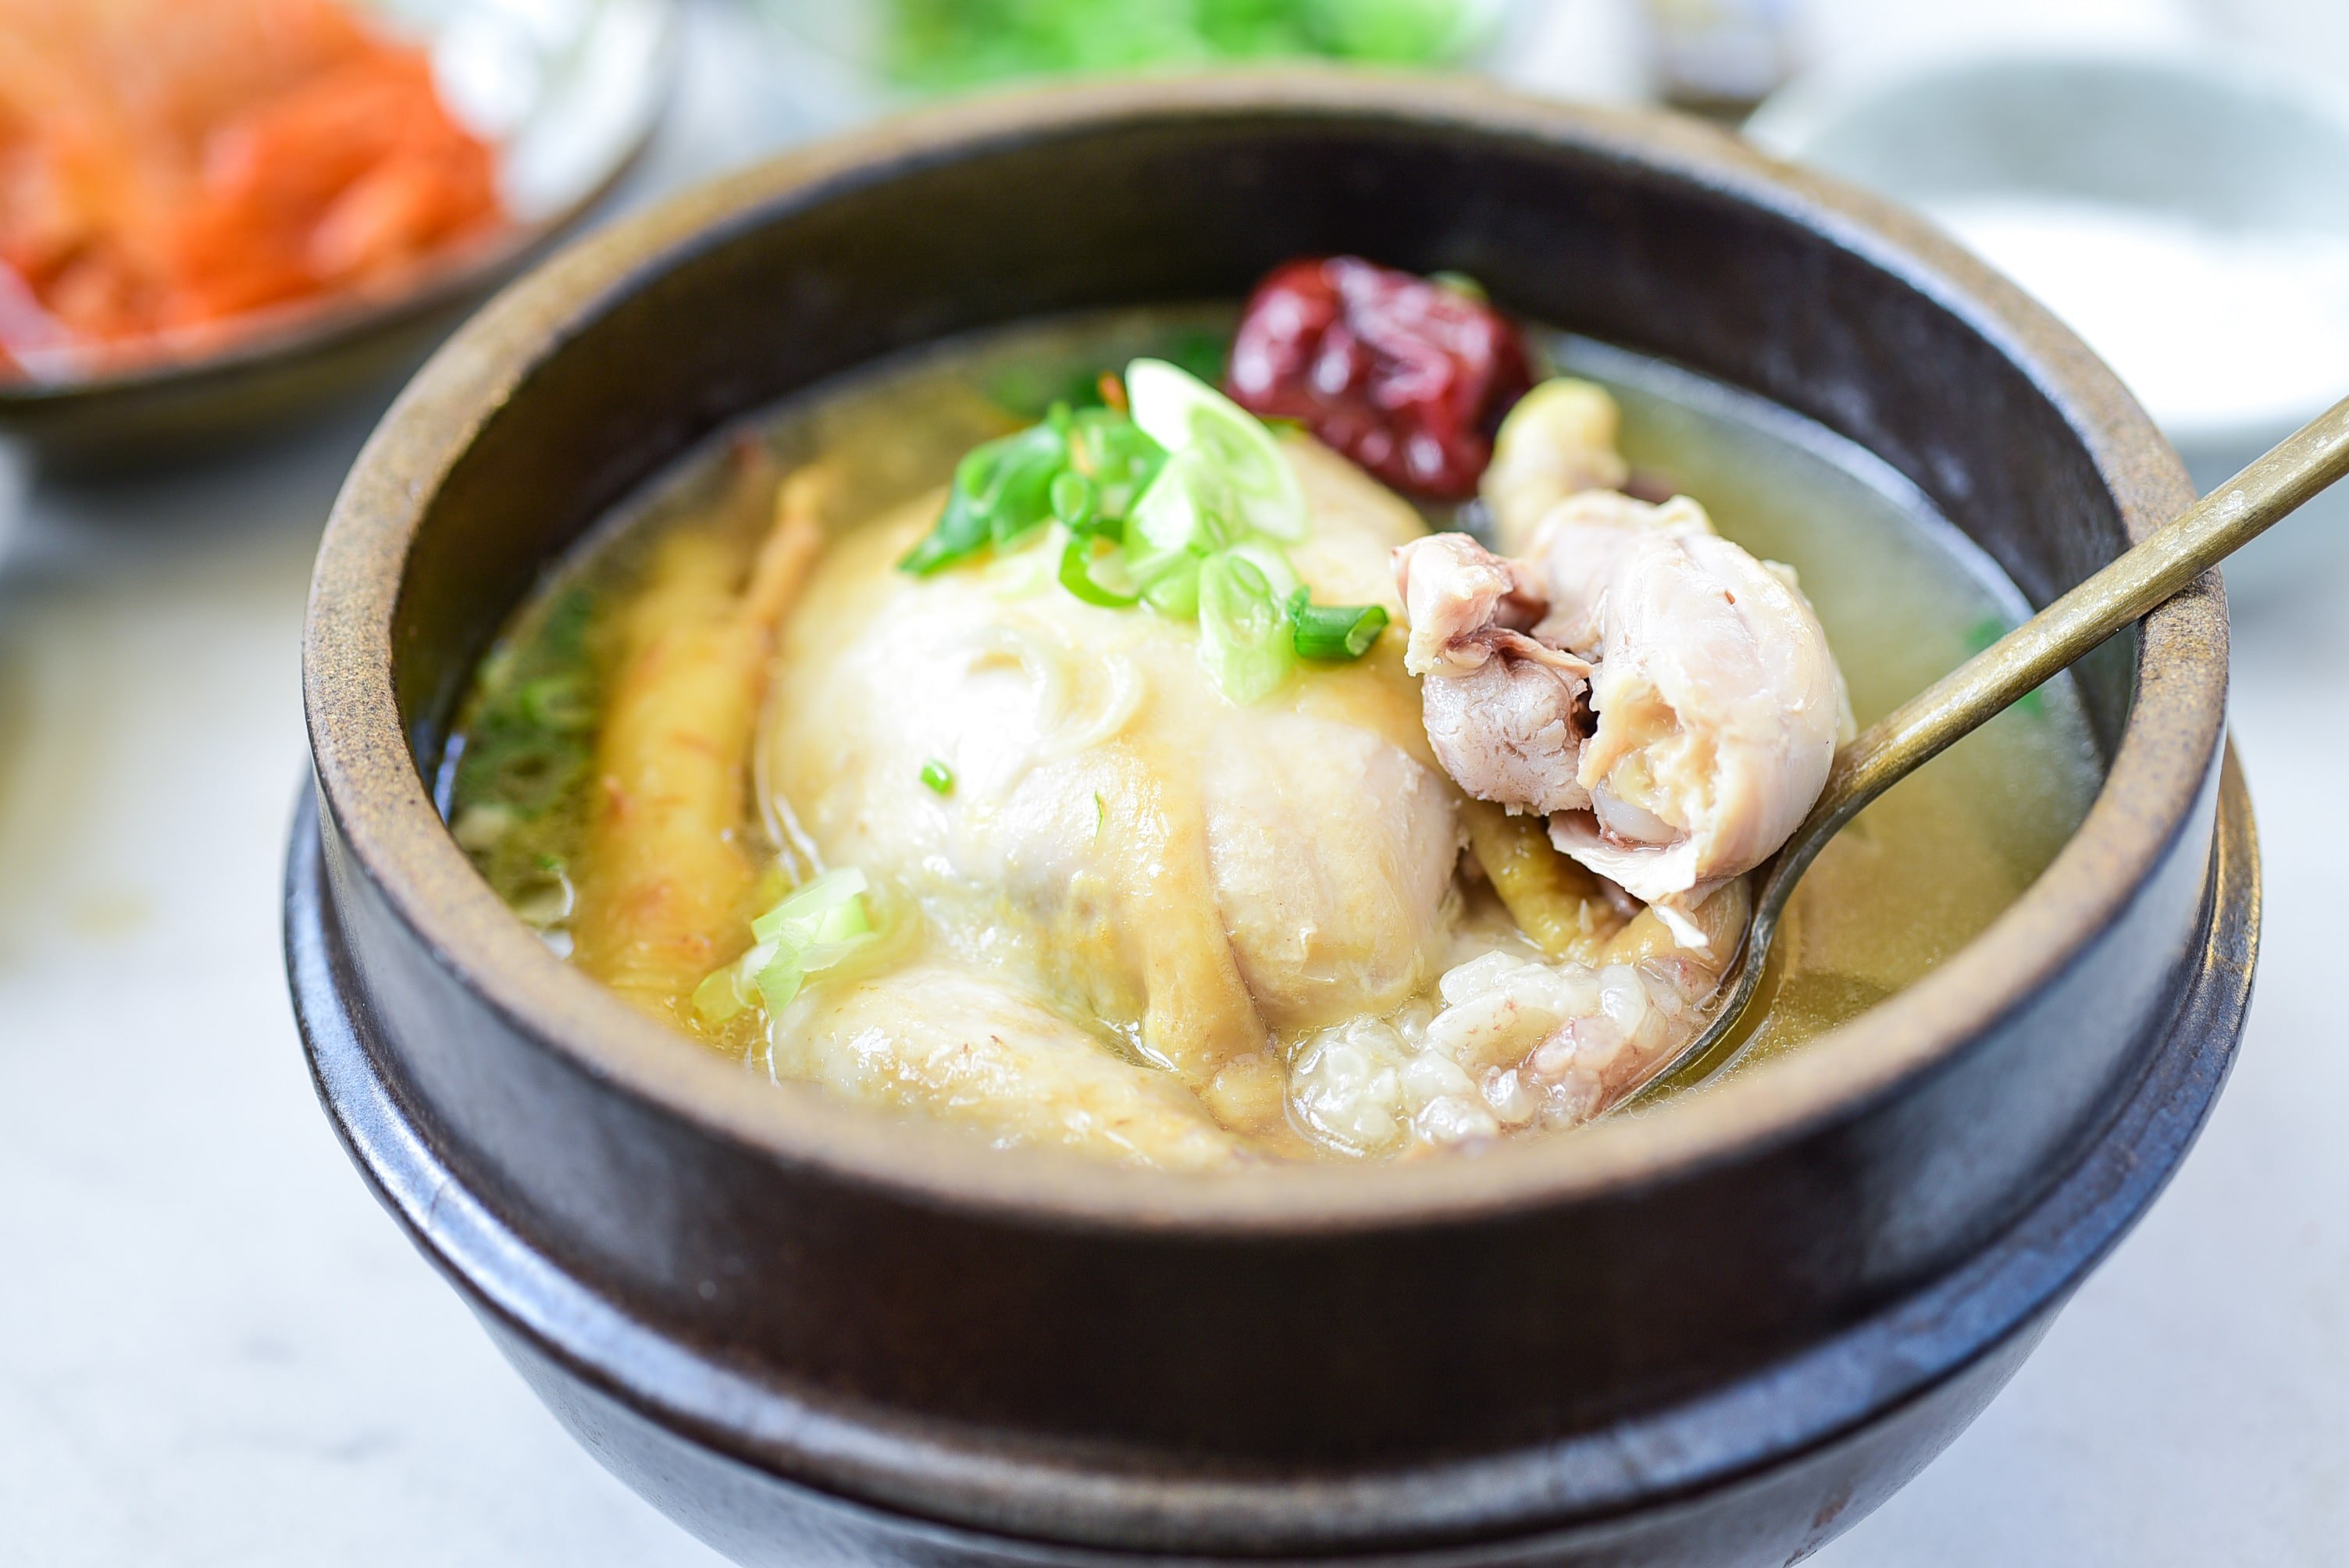 DSC 5131 2 1 - Samgyetang (Ginseng Chicken Soup)